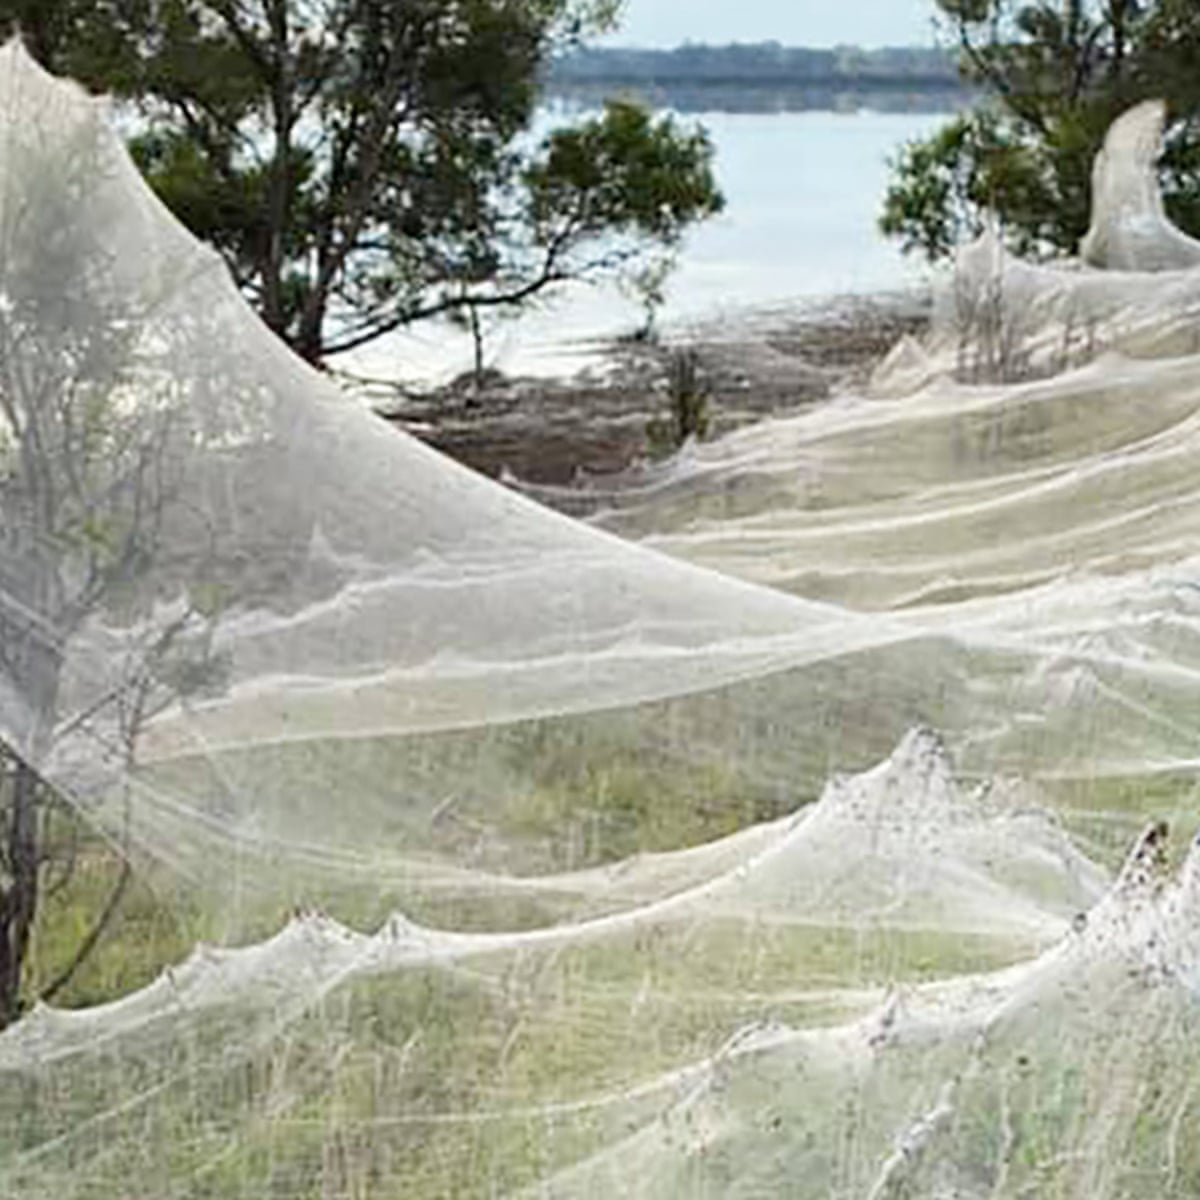 They look like waves': spider webs blanket Gippsland after Victorian floods, Australia weather